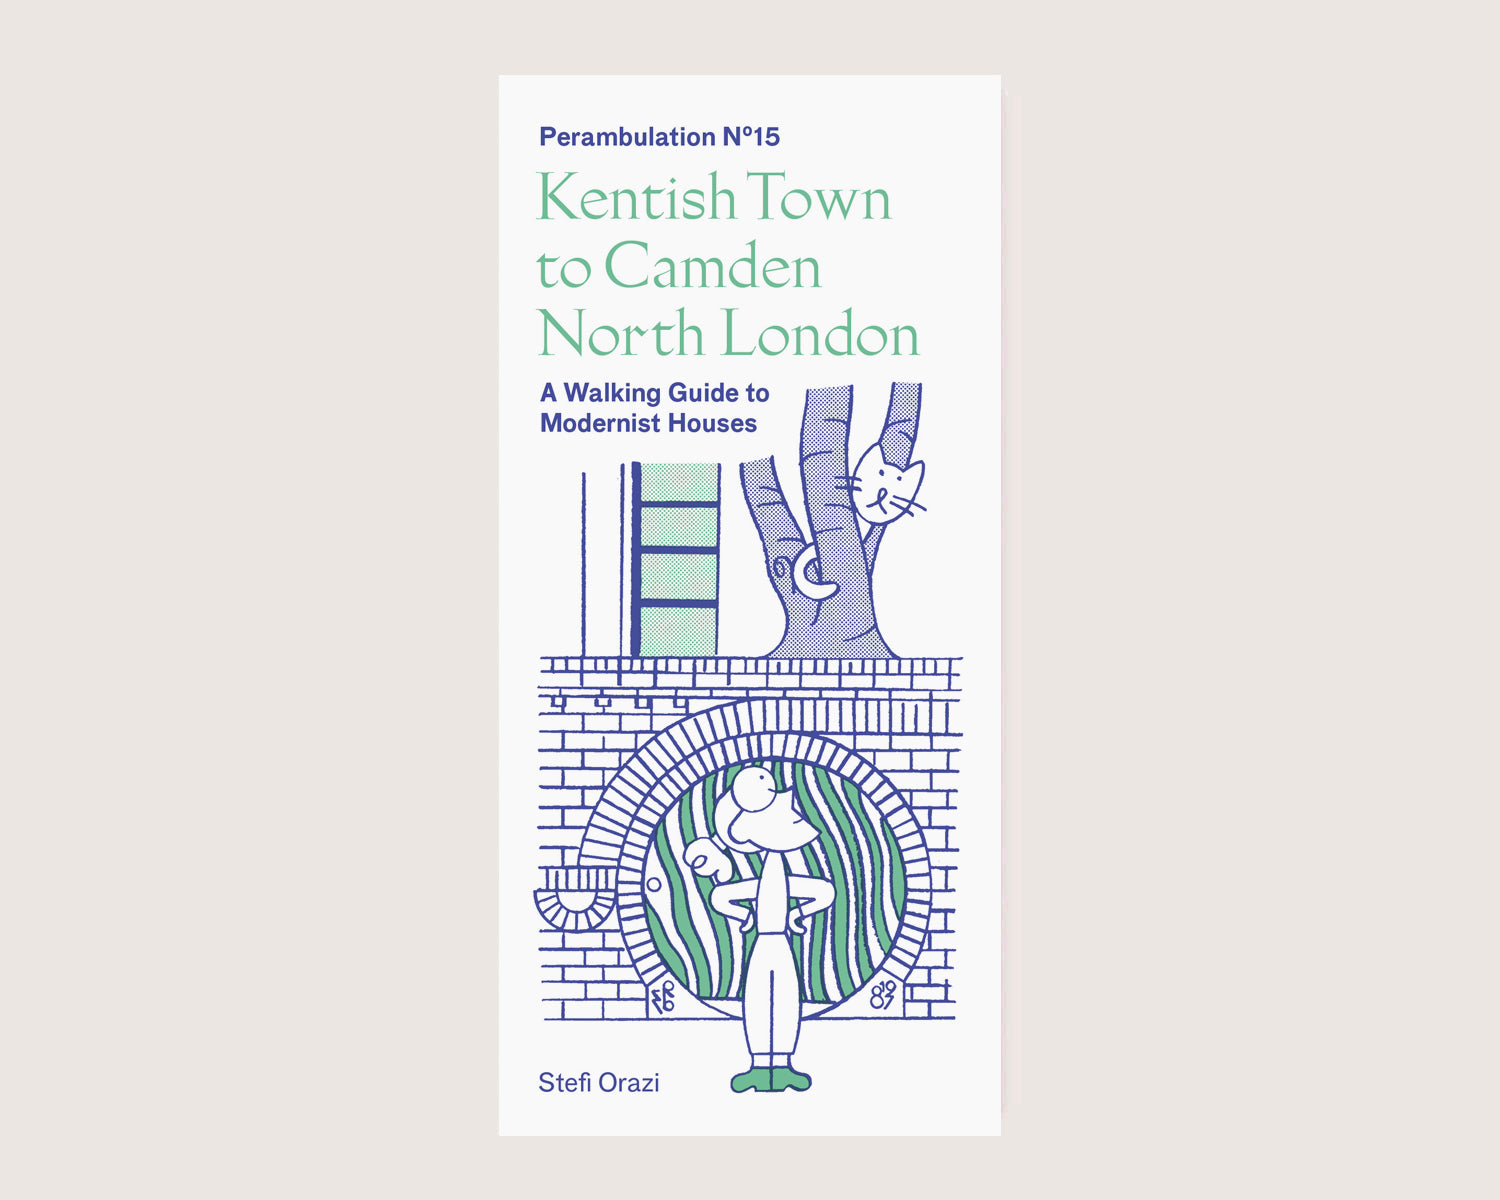 Perambulation Nº15—Kentish Town to Camden, North London by Stefi Orazi